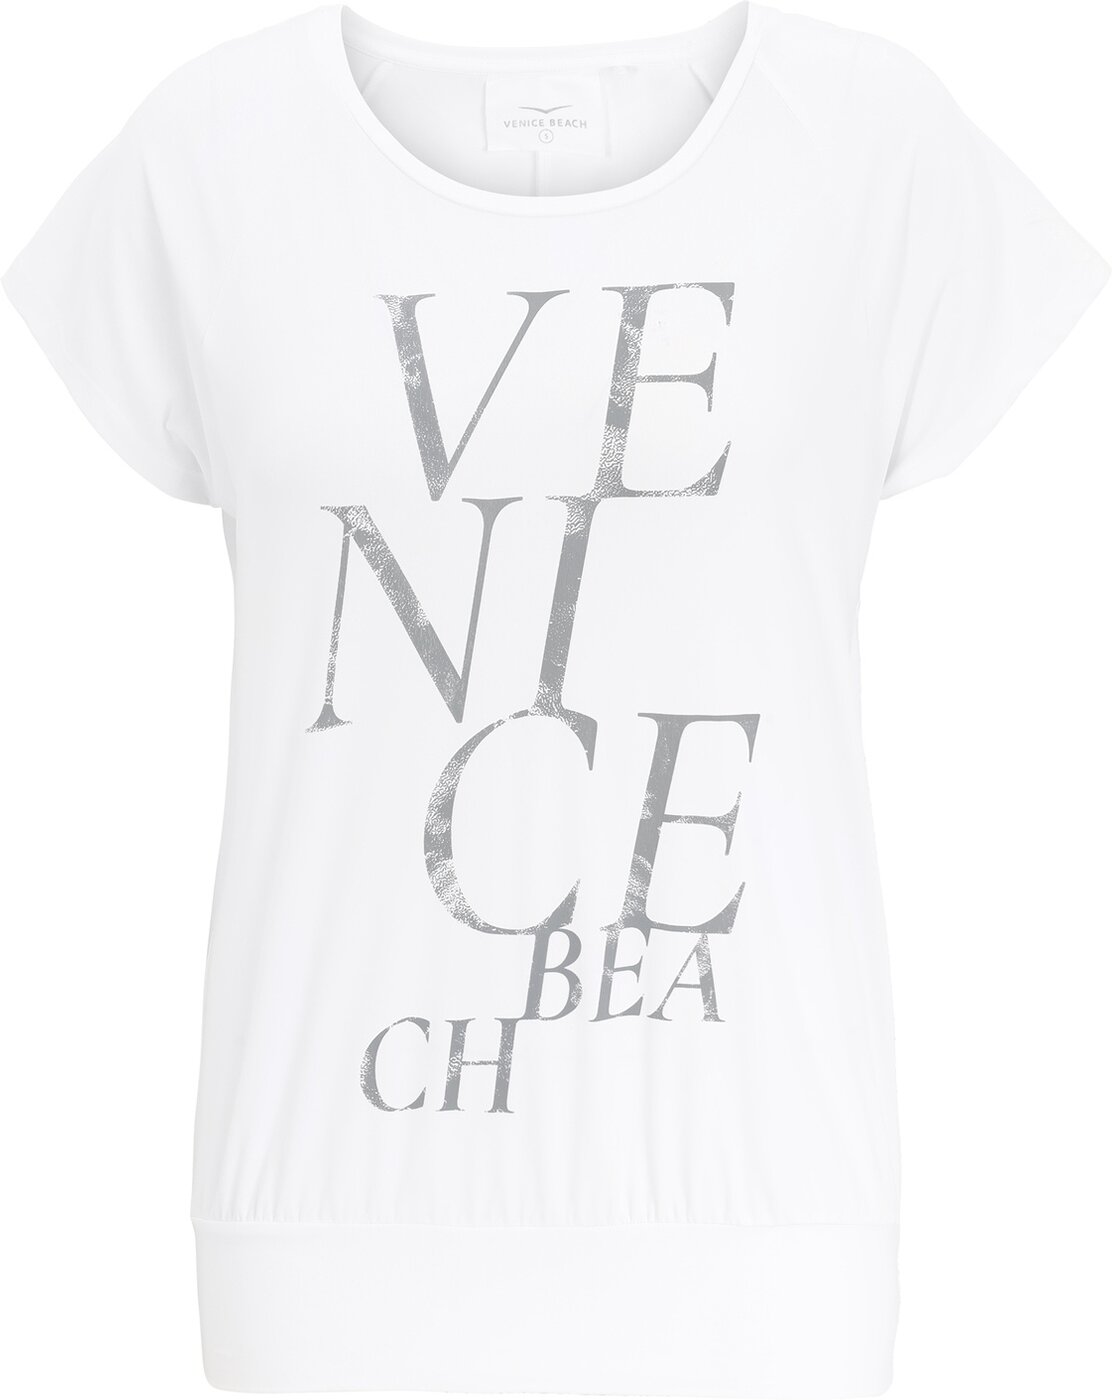 DL T-Shirt online Venice VB_Nobel Beach kaufen 02